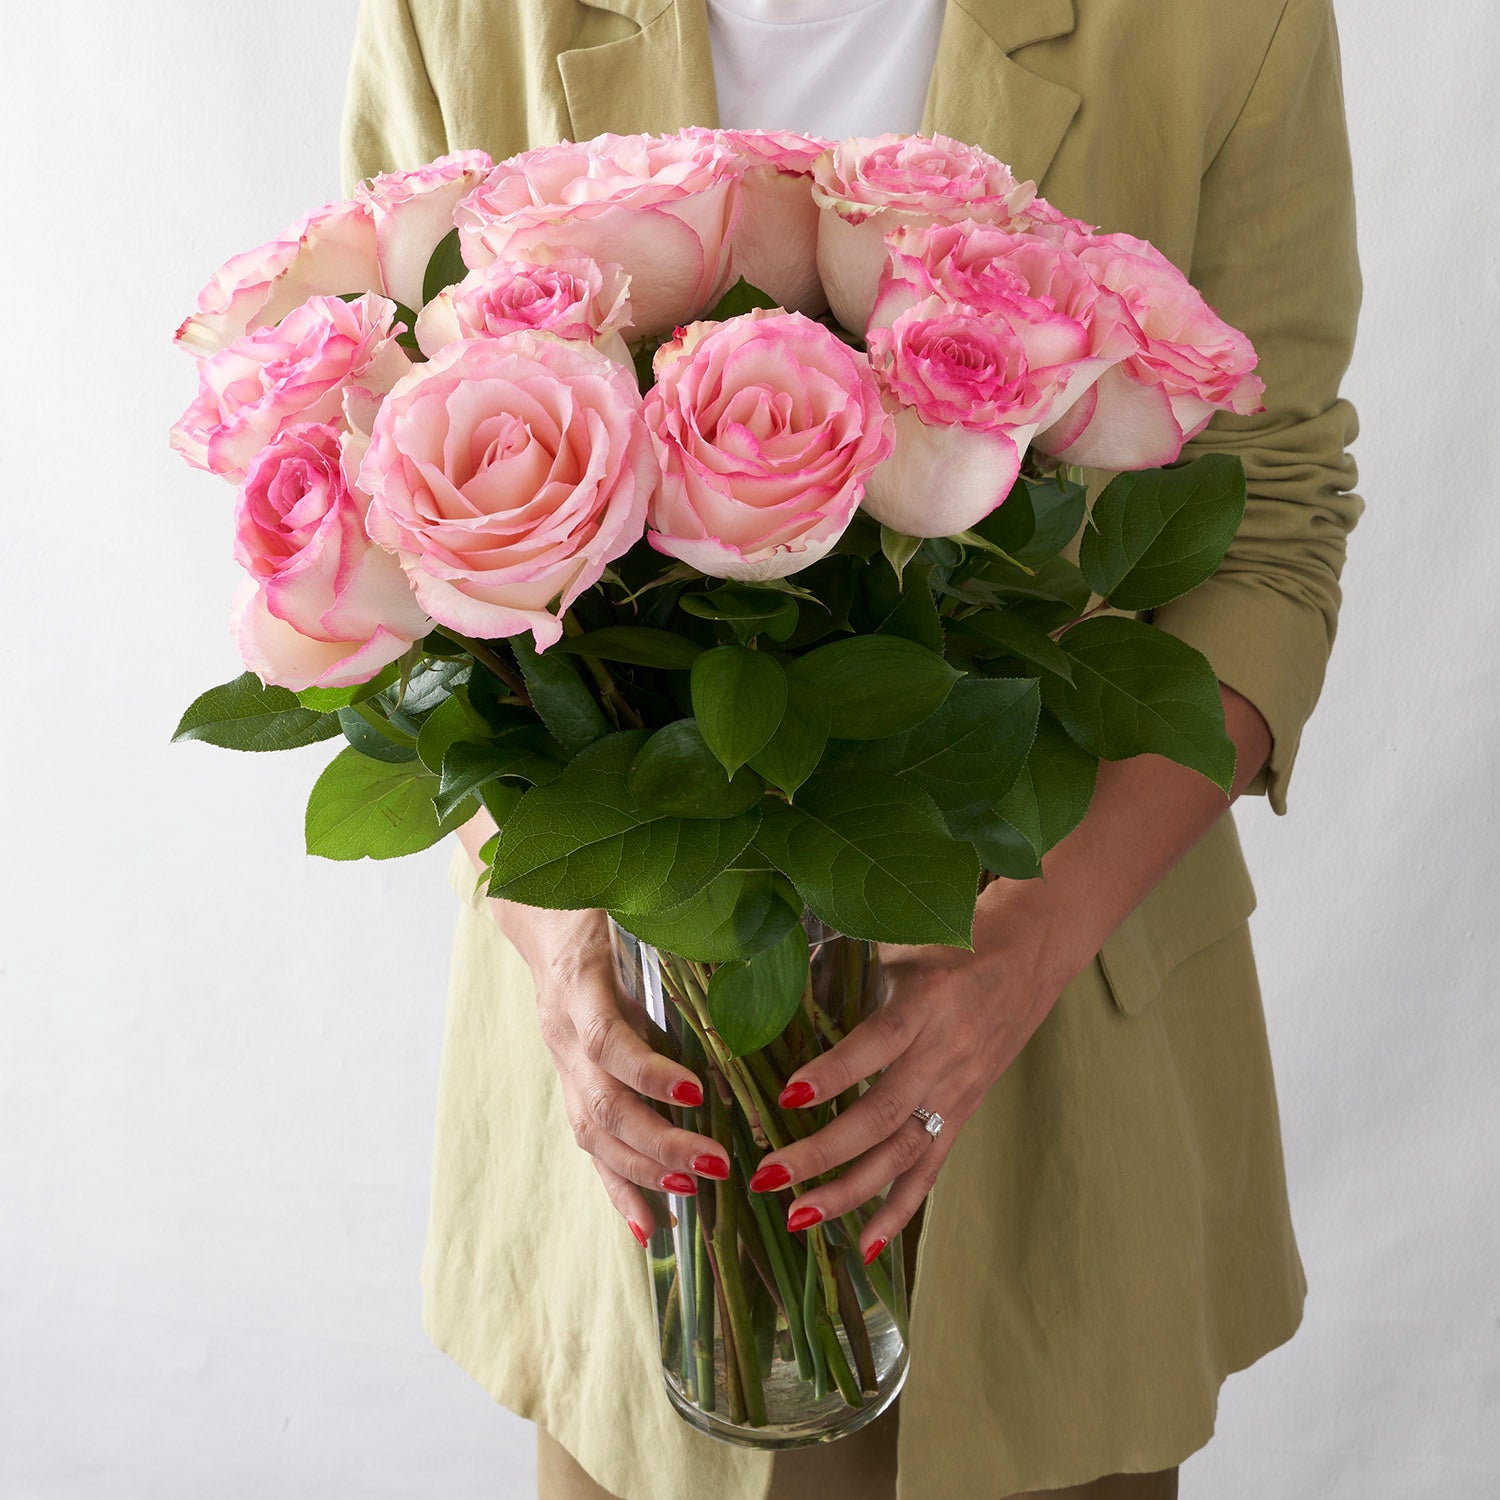 woman in pale green coat holding glass vase full of pink Esperance roses.